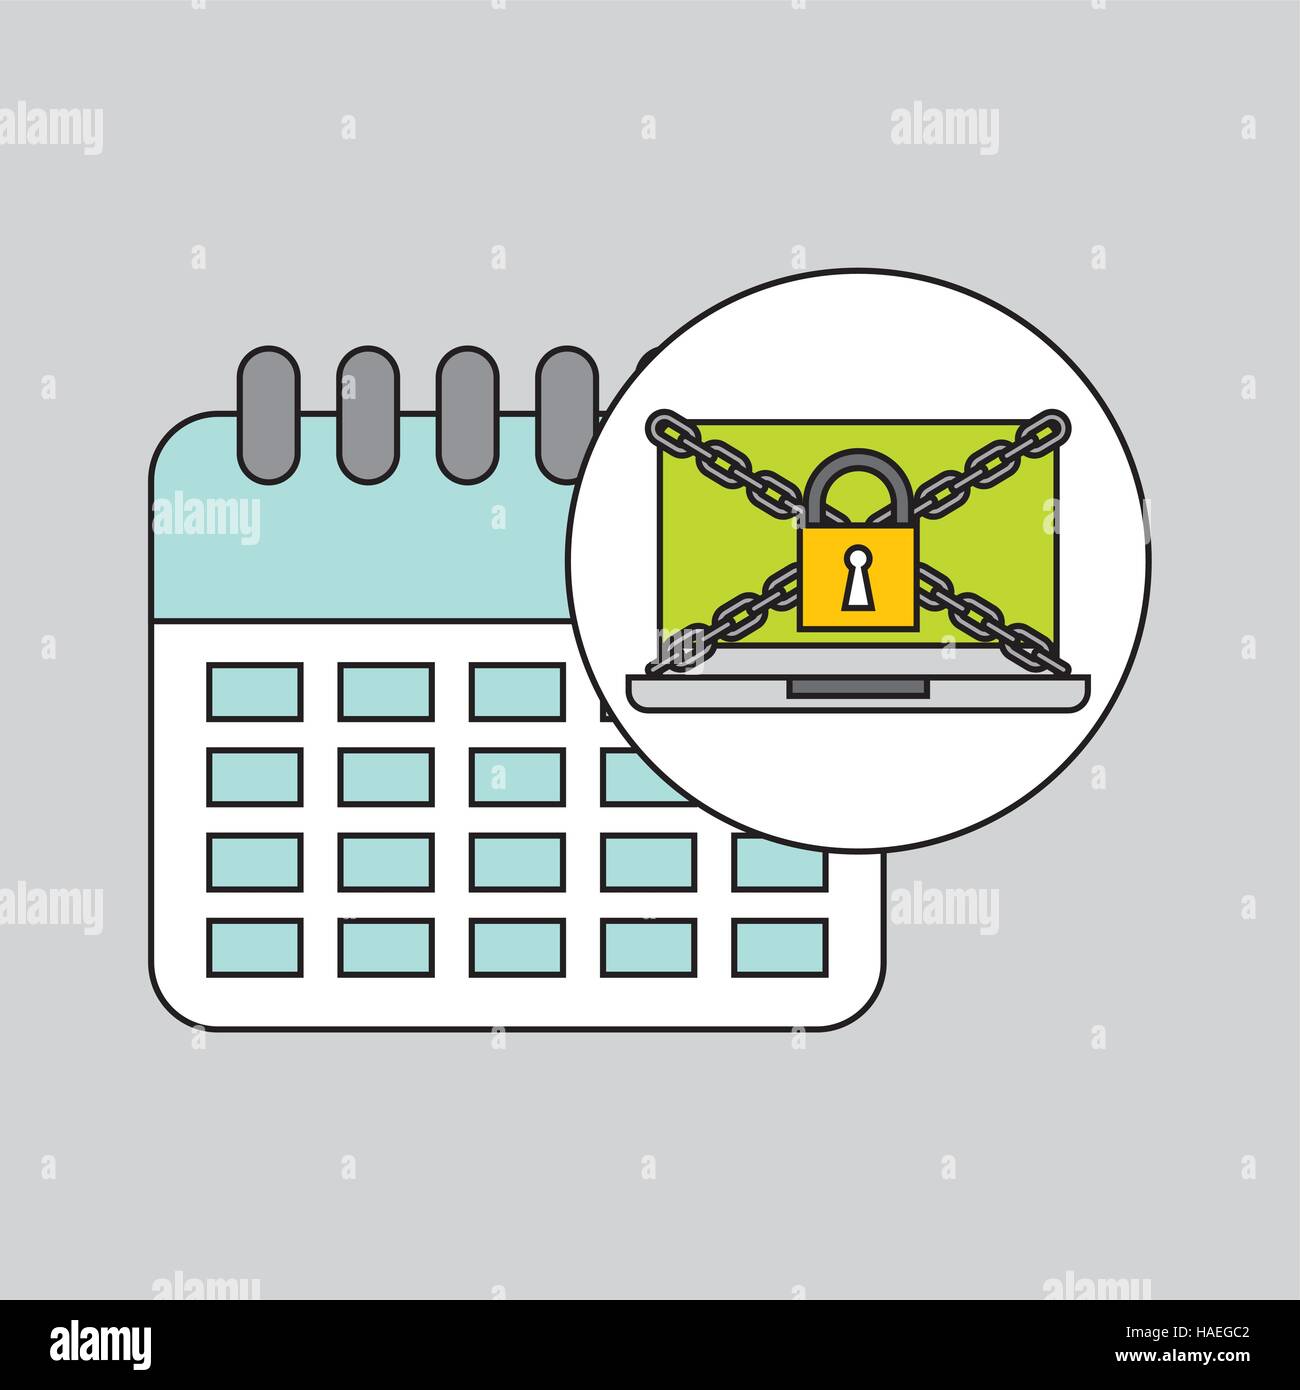 calendar security technology vector illustration eps 10 Stock